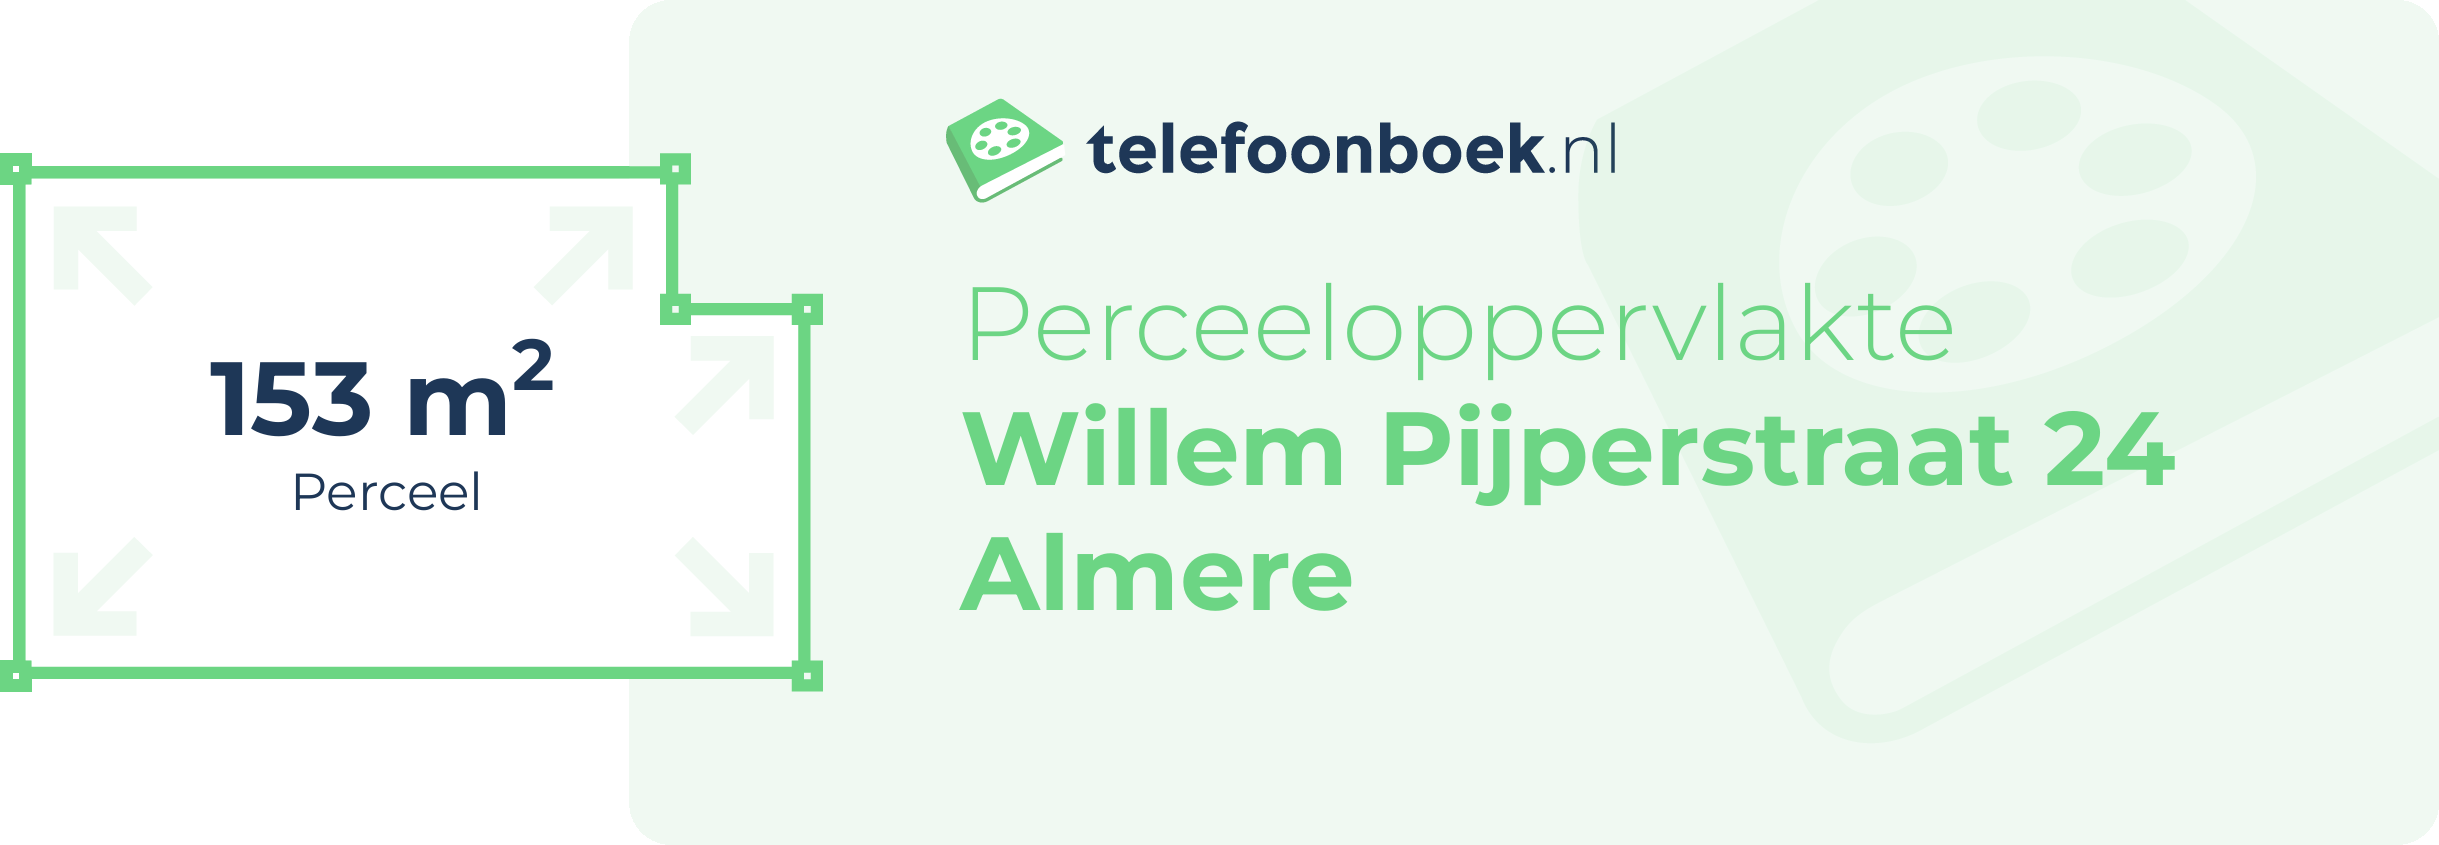 Perceeloppervlakte Willem Pijperstraat 24 Almere